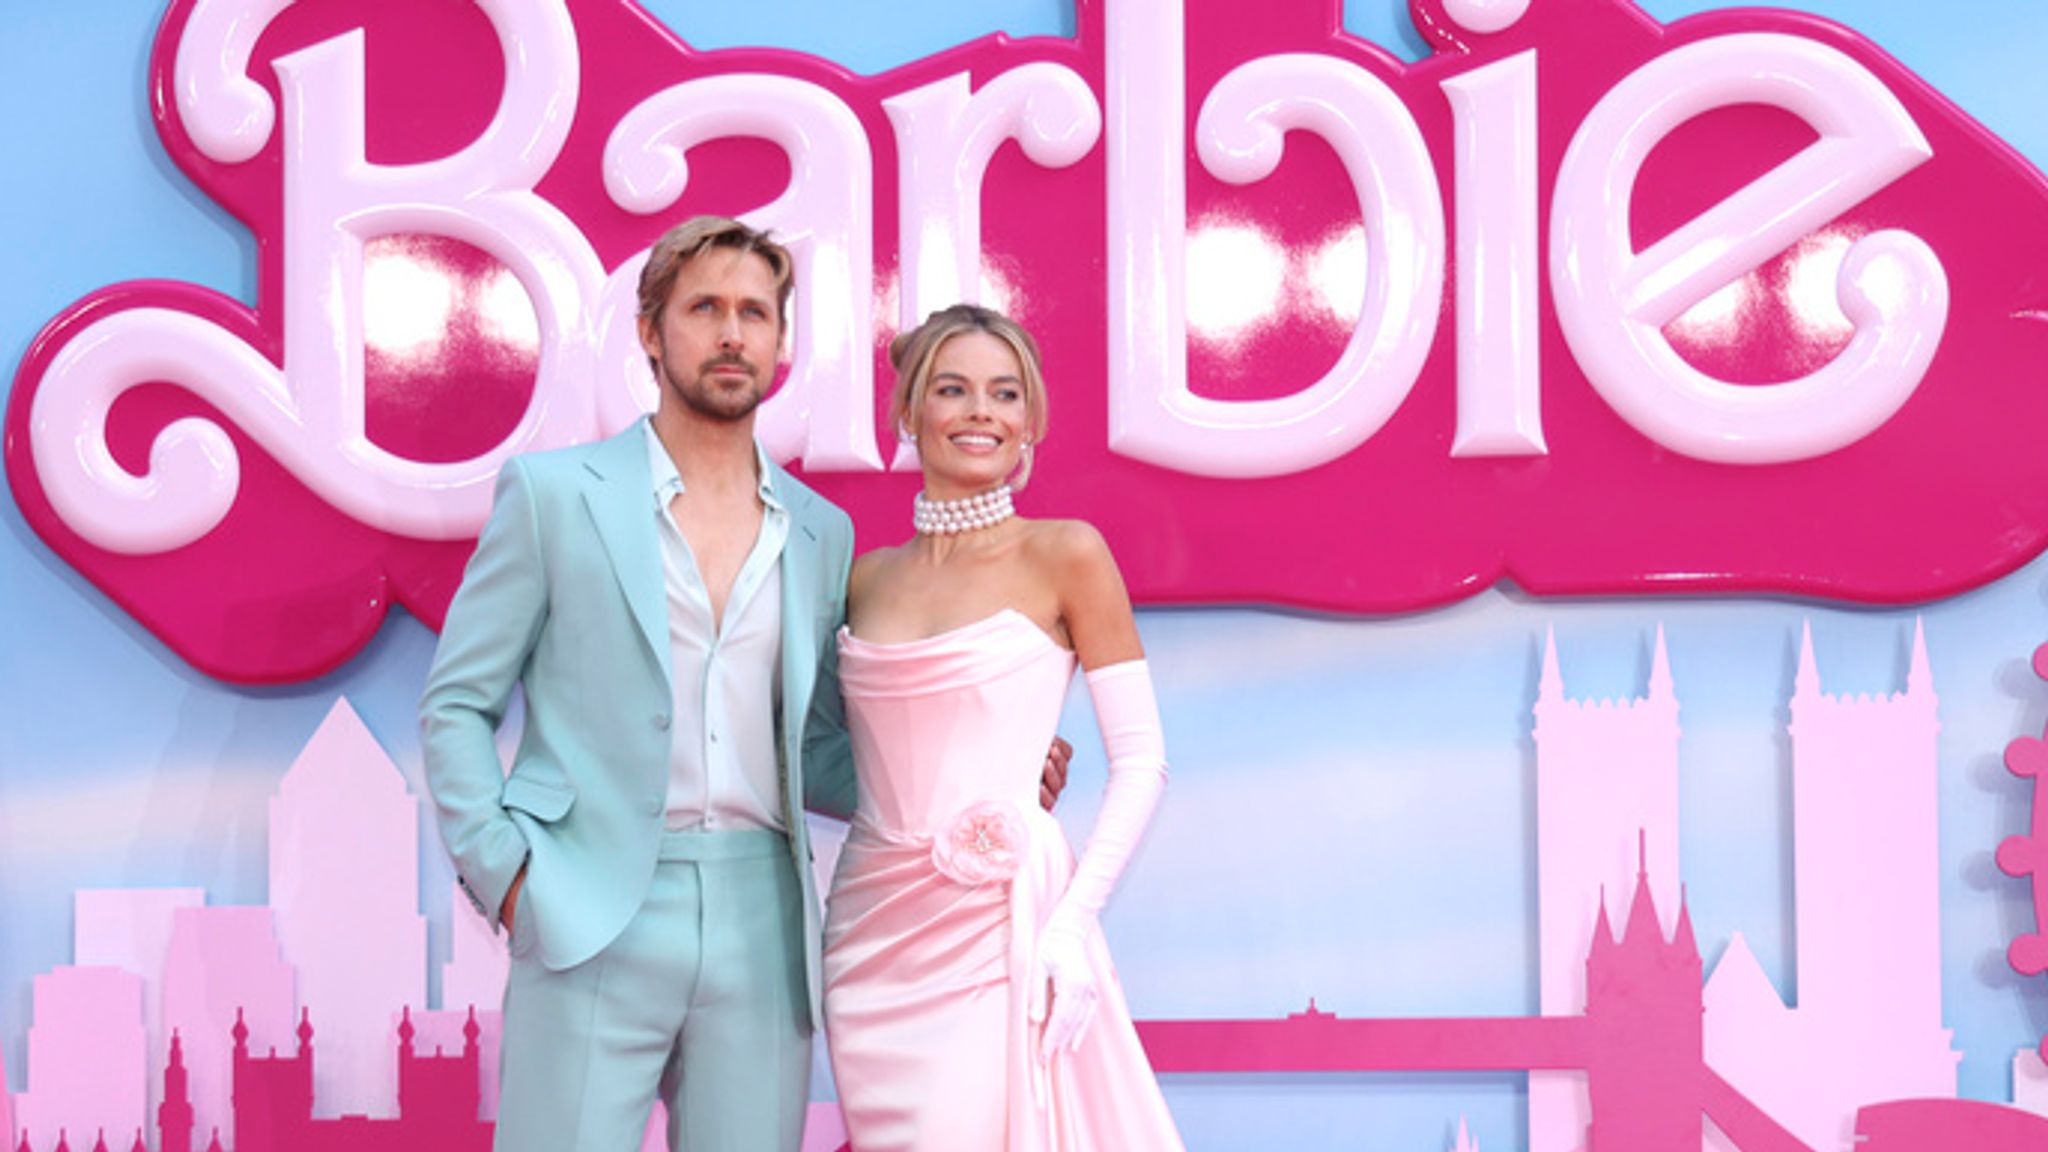 Barbie stars Margot Robbie and Ryan Gosling visit SXM